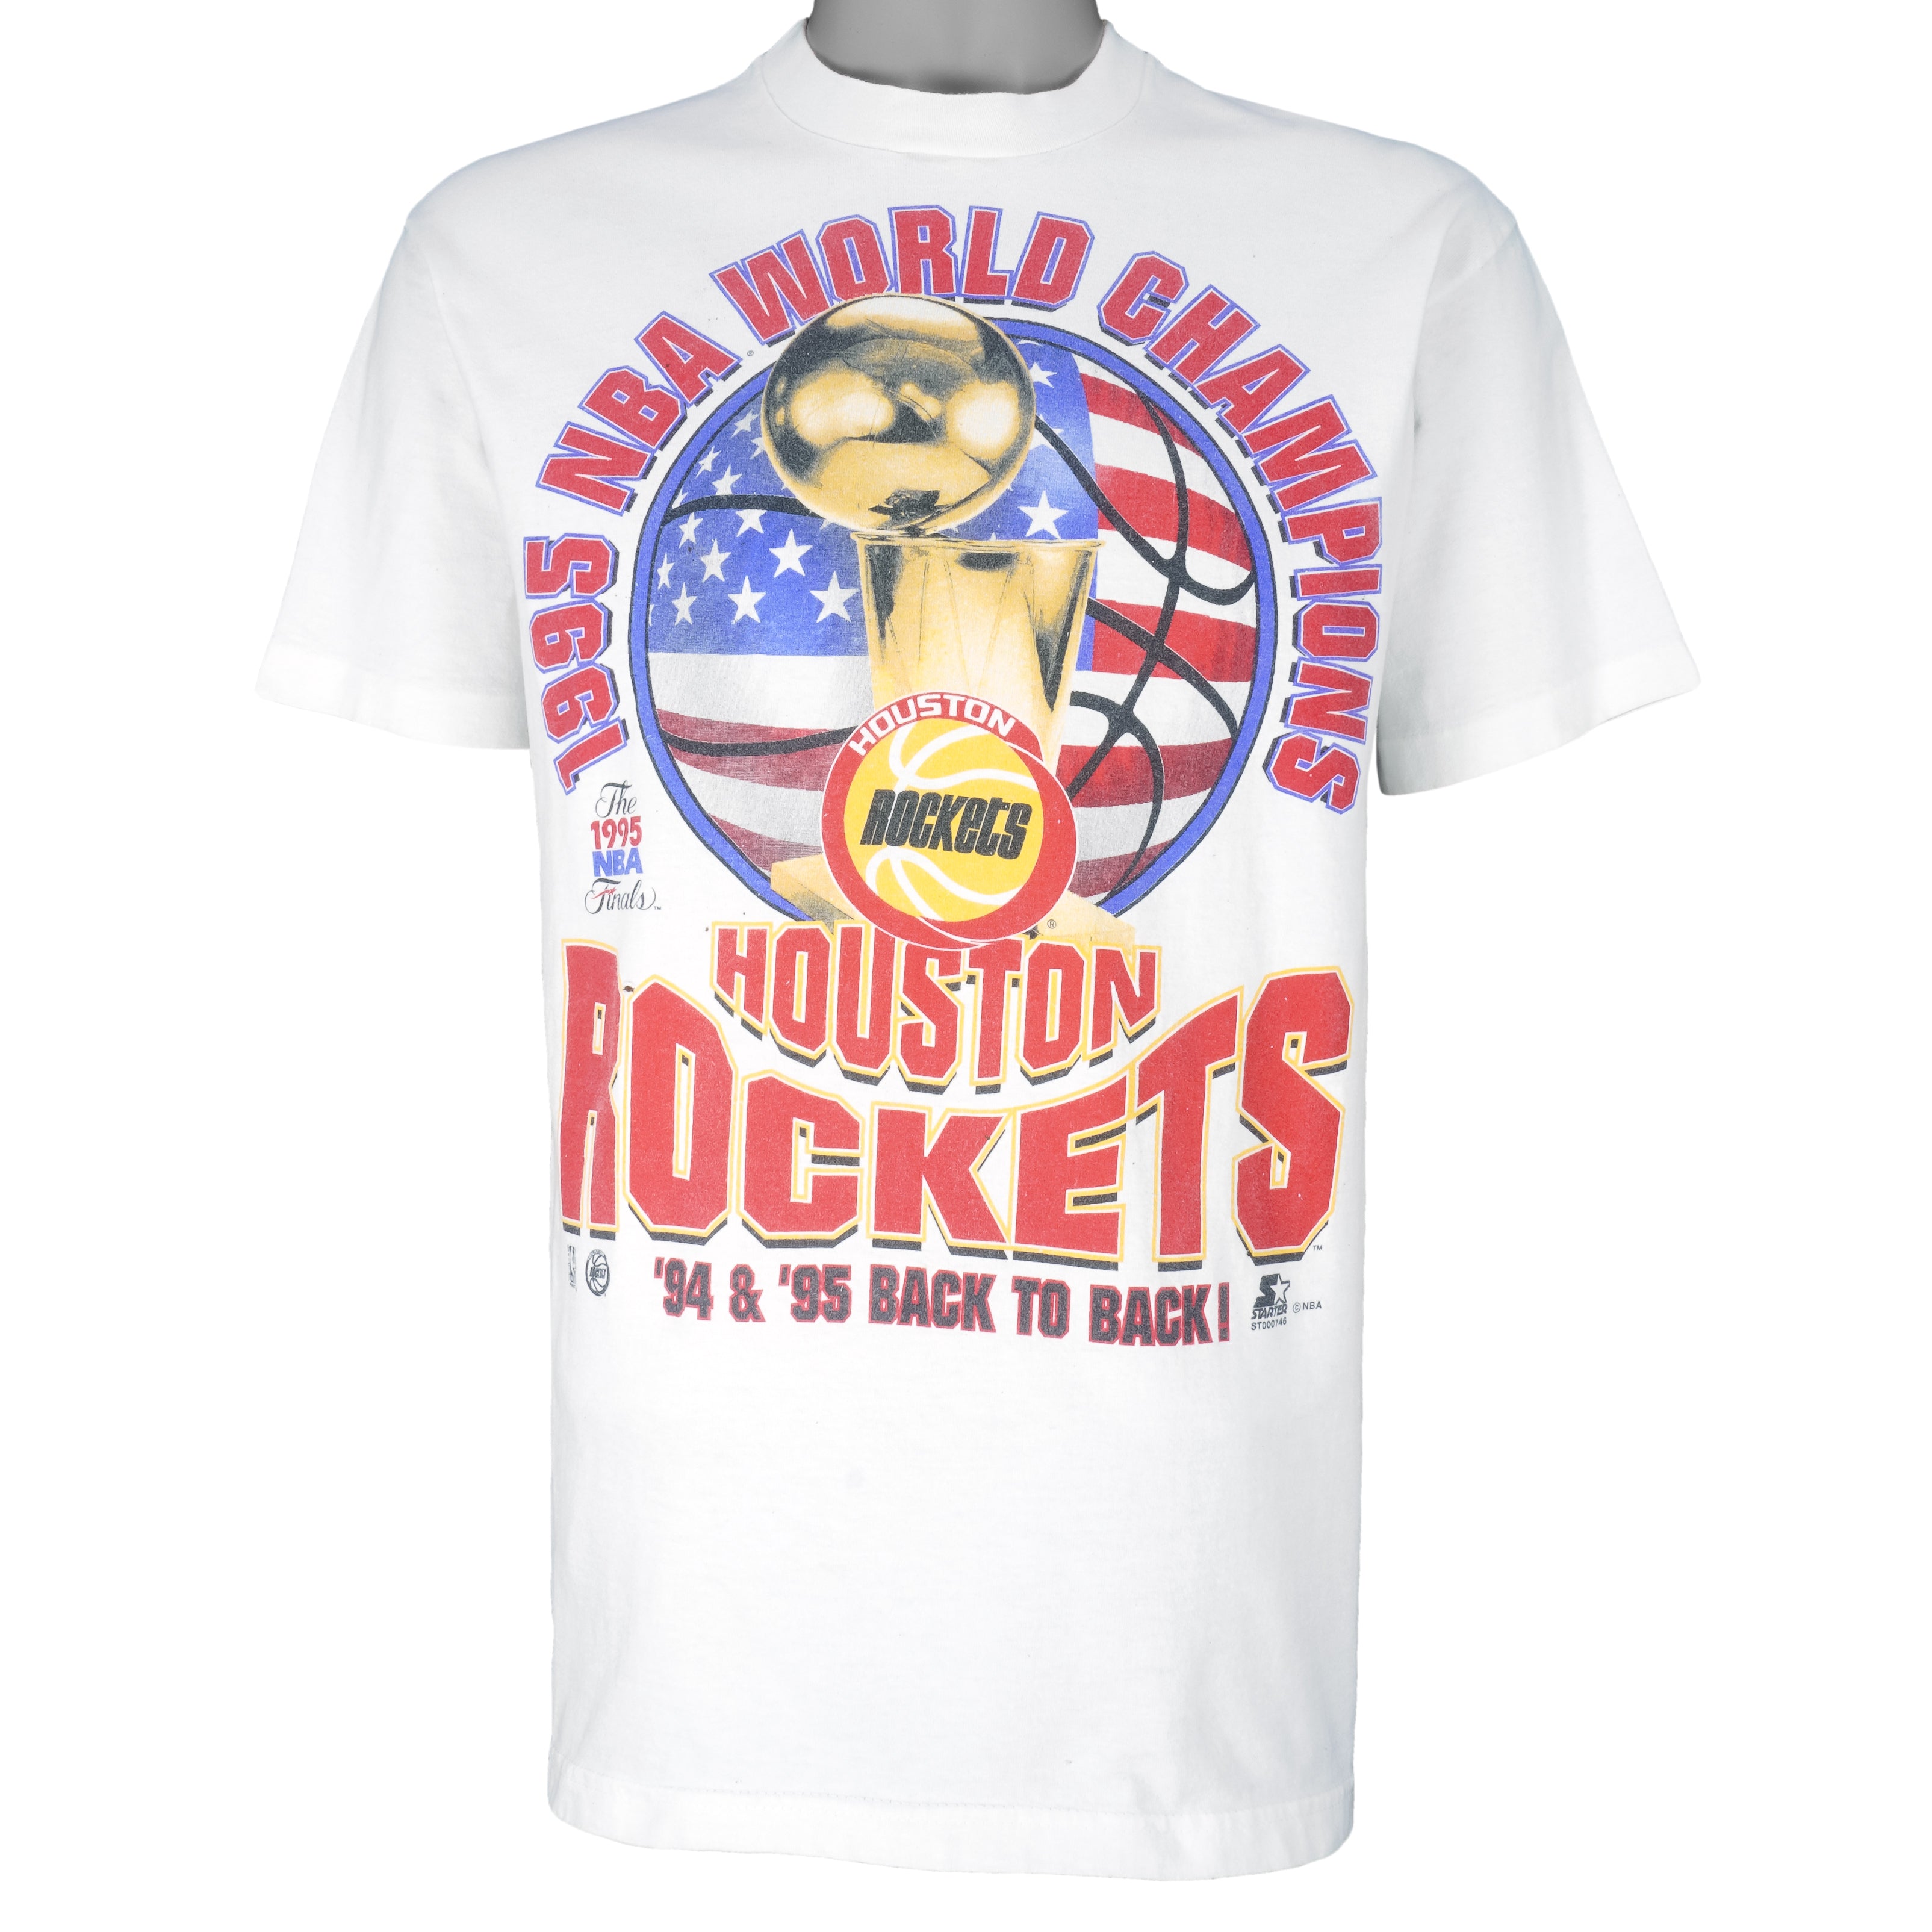 Vintage, Shirts & Tops, New Jersey Rockets Hockey Jersey Youth Size  Medium